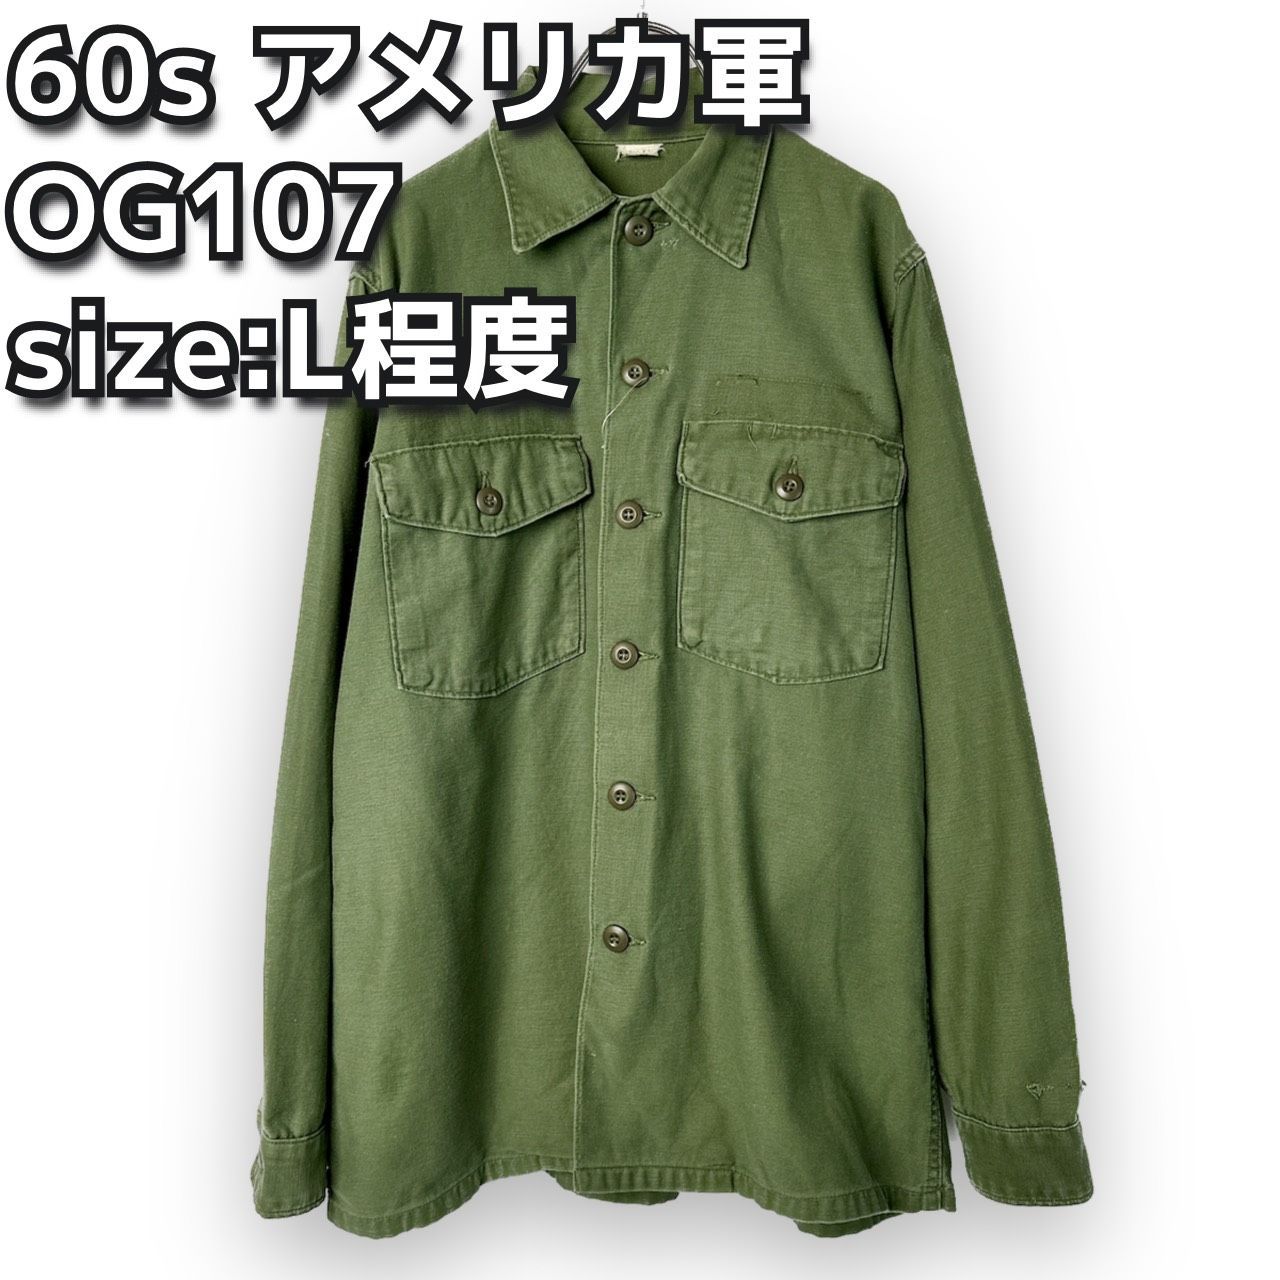 60s U .S .ARMY ユーティシャツ OG107 シャツ袖 ミリタリー vintage